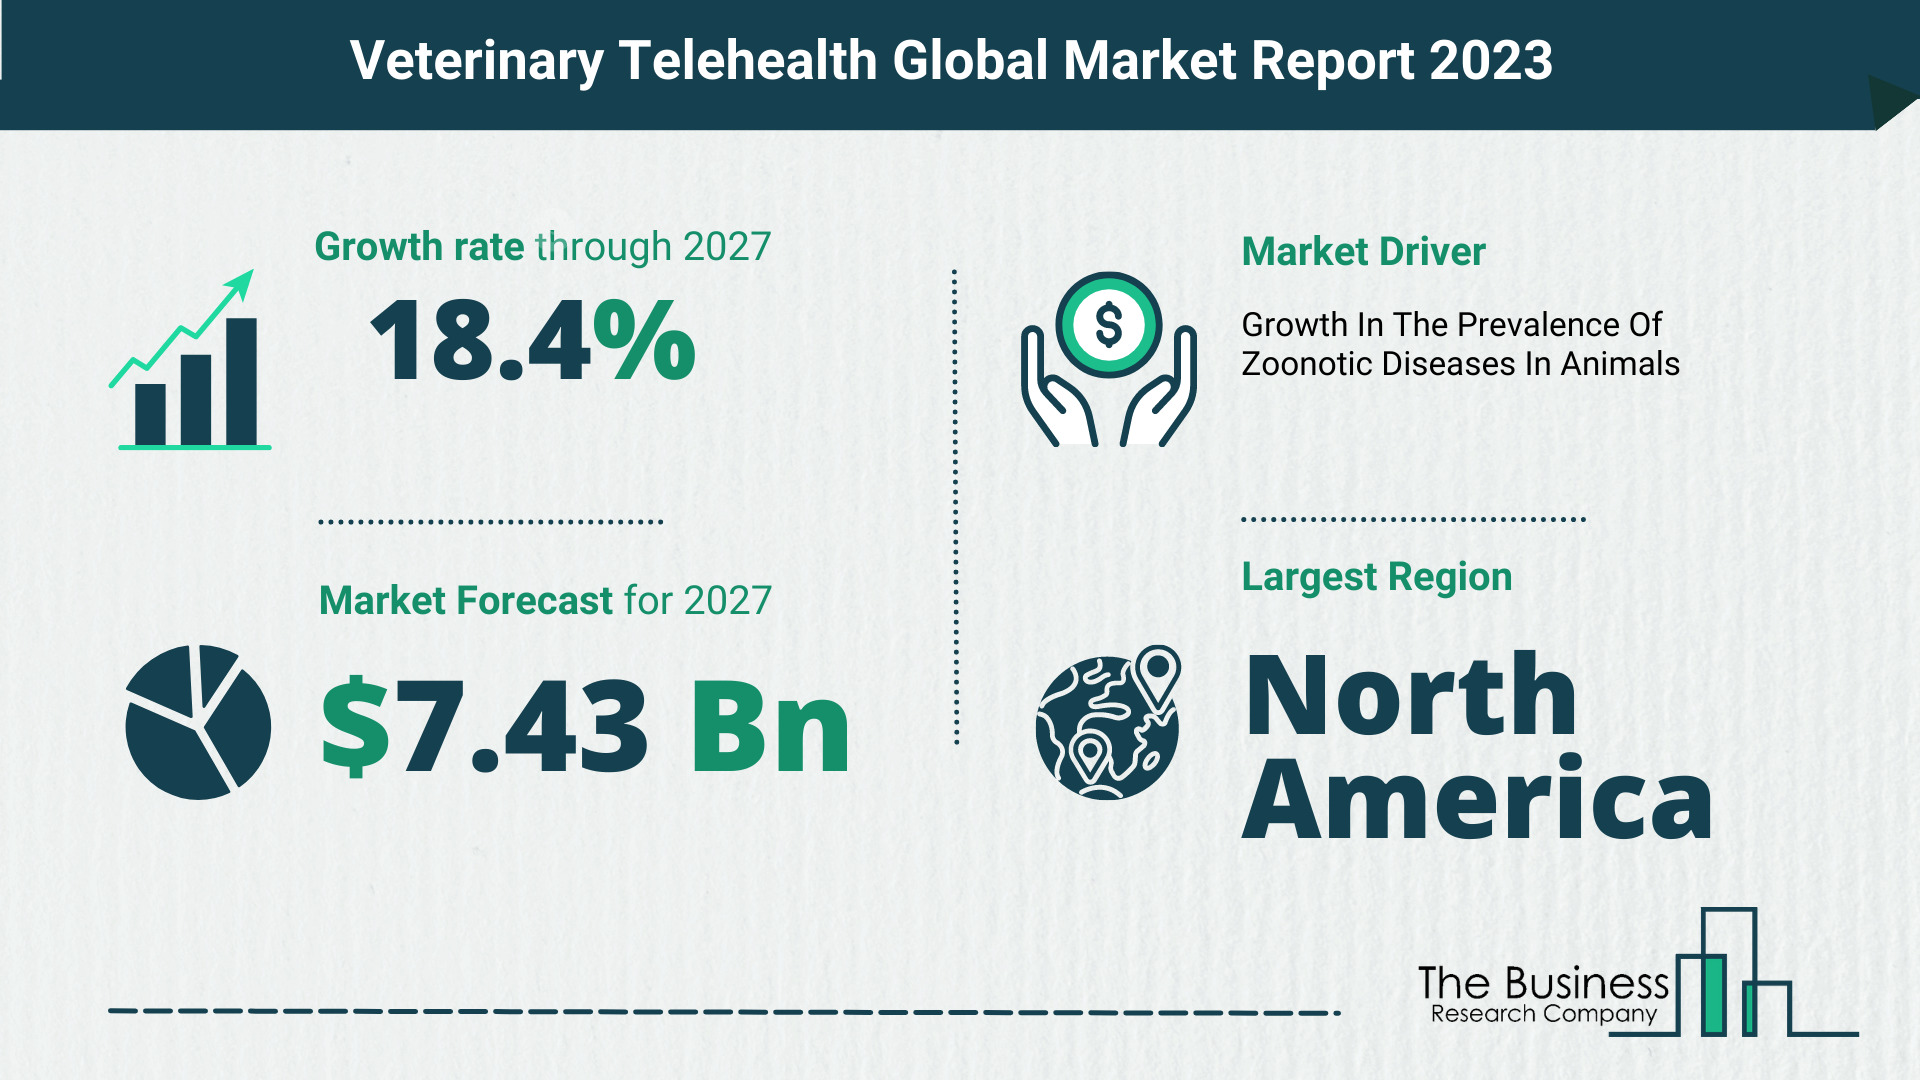 Global Veterinary Telehealth Market Size